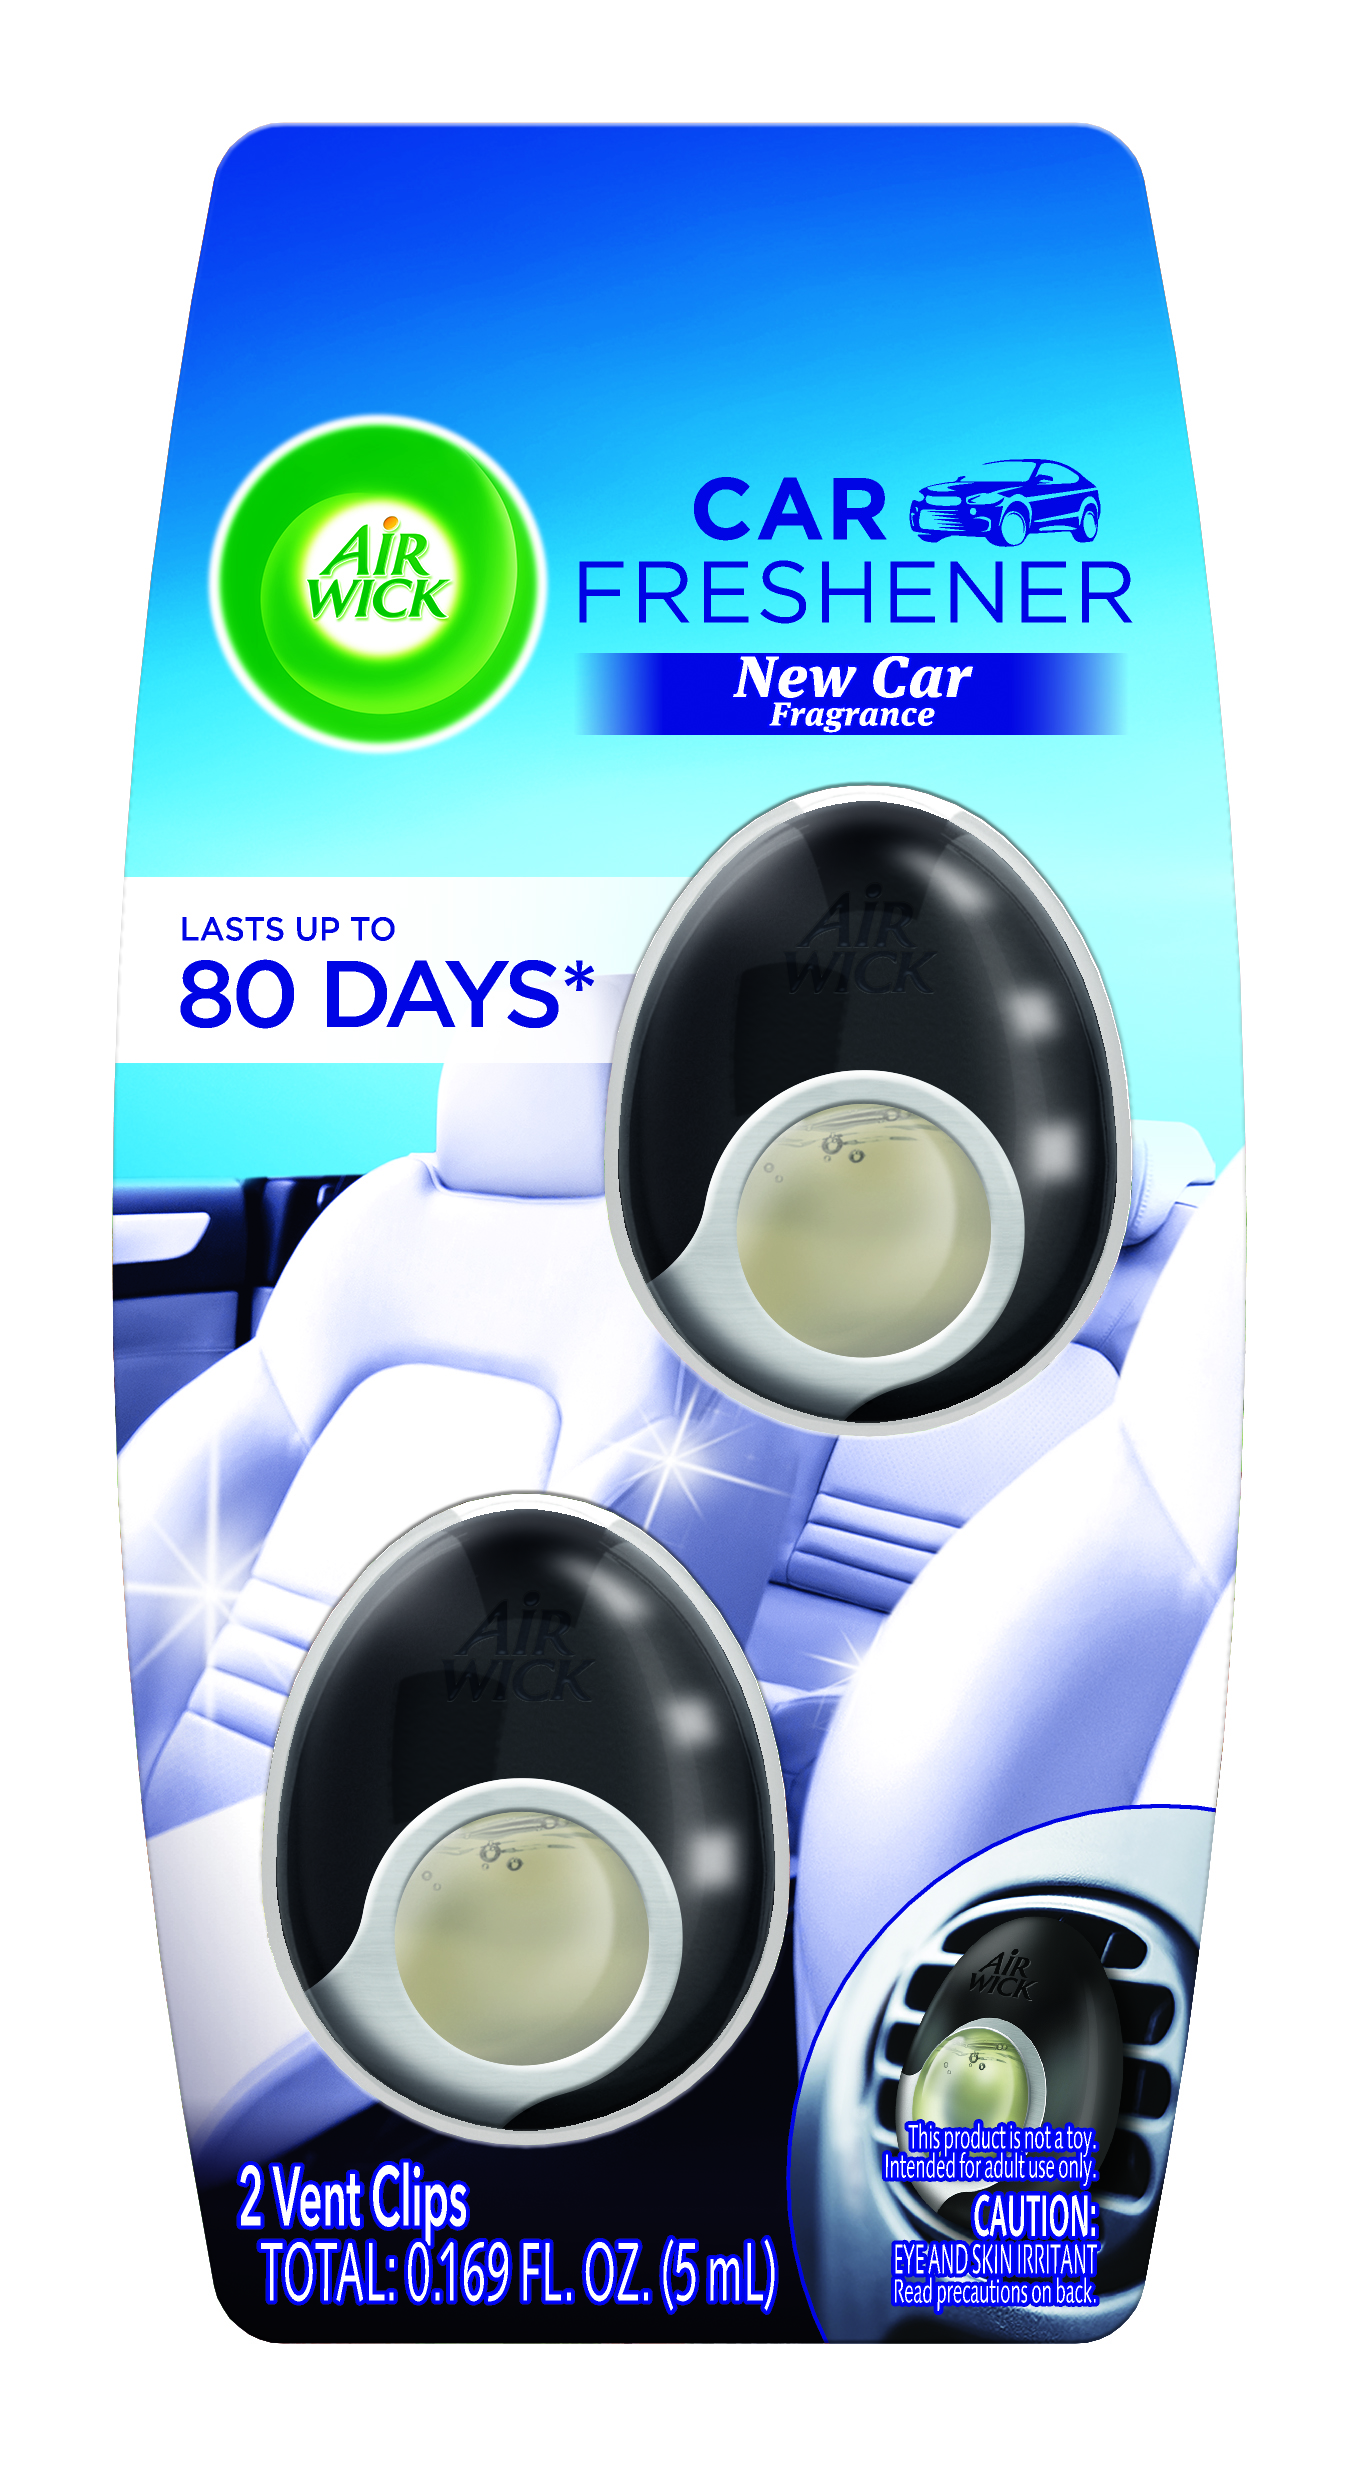 Air Wick Car Freshener Clip - New Car Fragrance